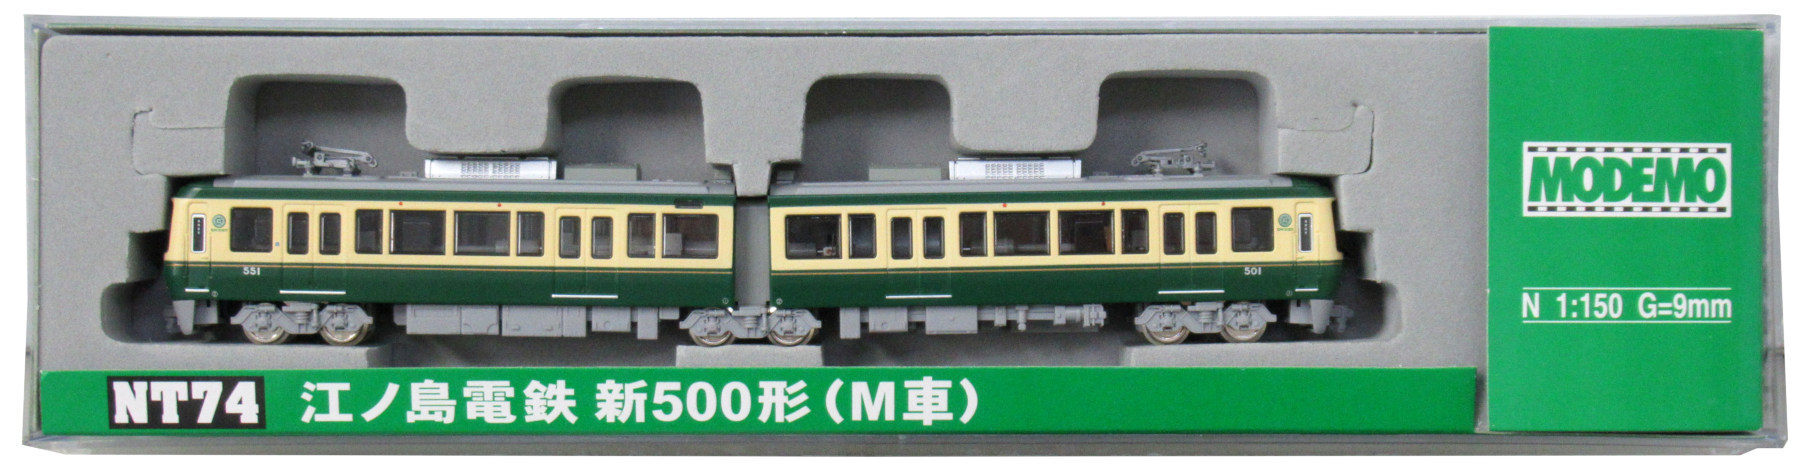 公式]鉄道模型(NT74江ノ島電鉄 新500形 (M車))商品詳細｜MODEMO(モデモ